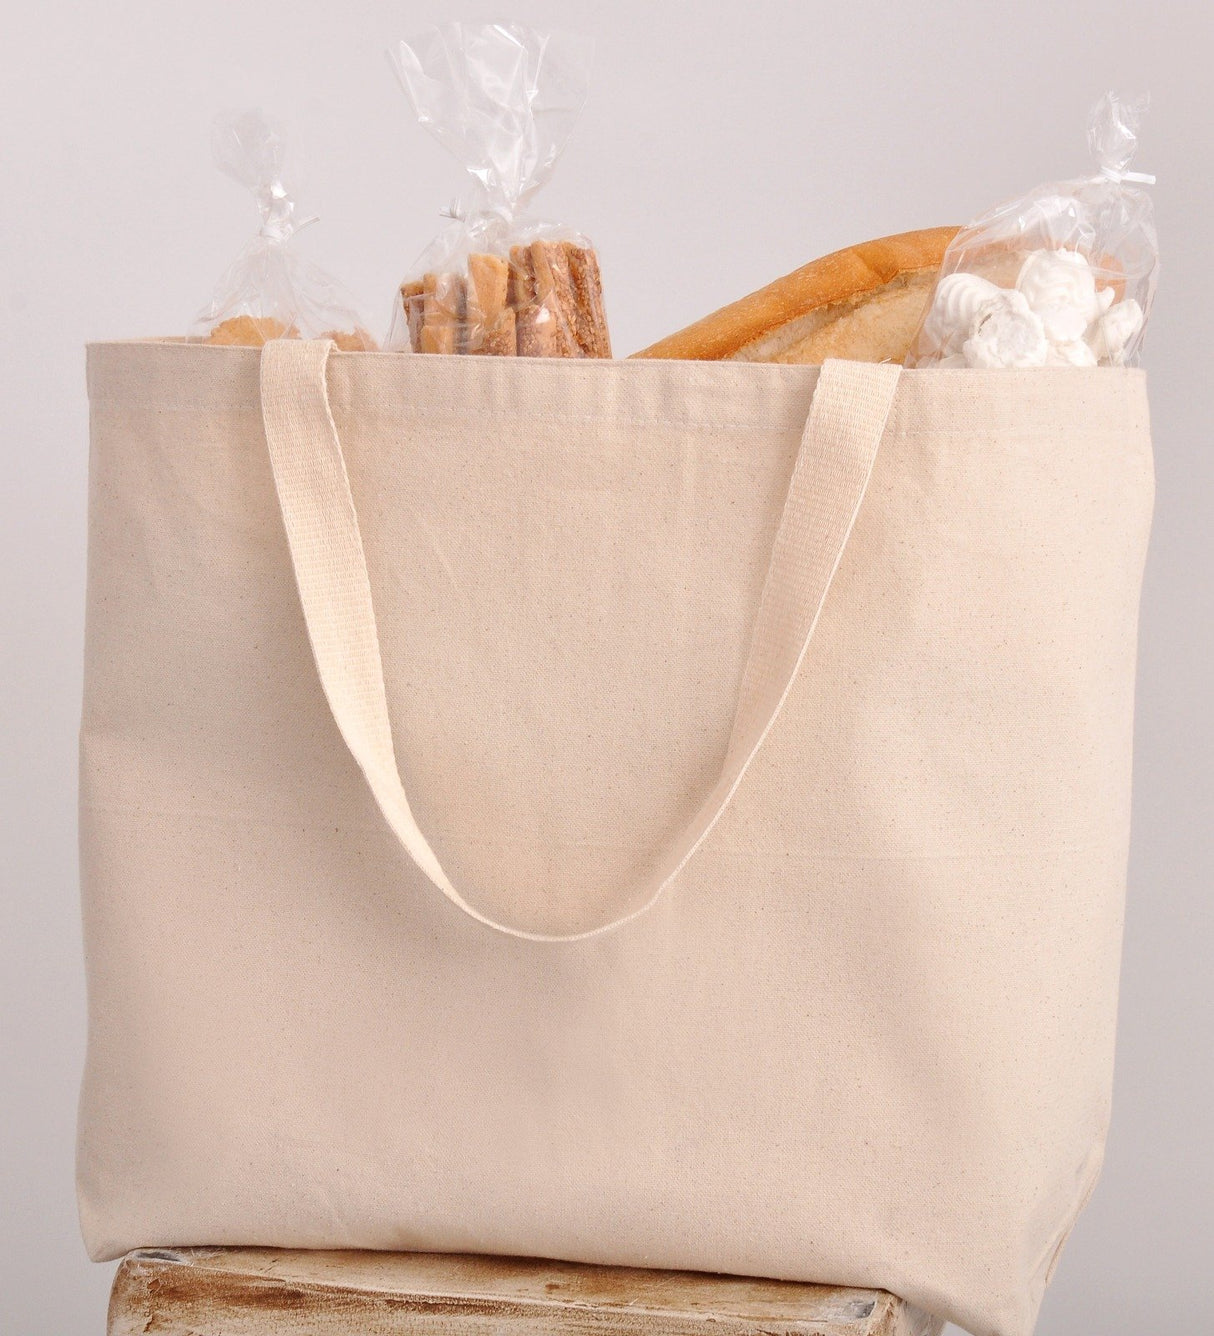 12 ct Large Canvas Wholesale Tote Bag with Long Web Handles - By Dozen